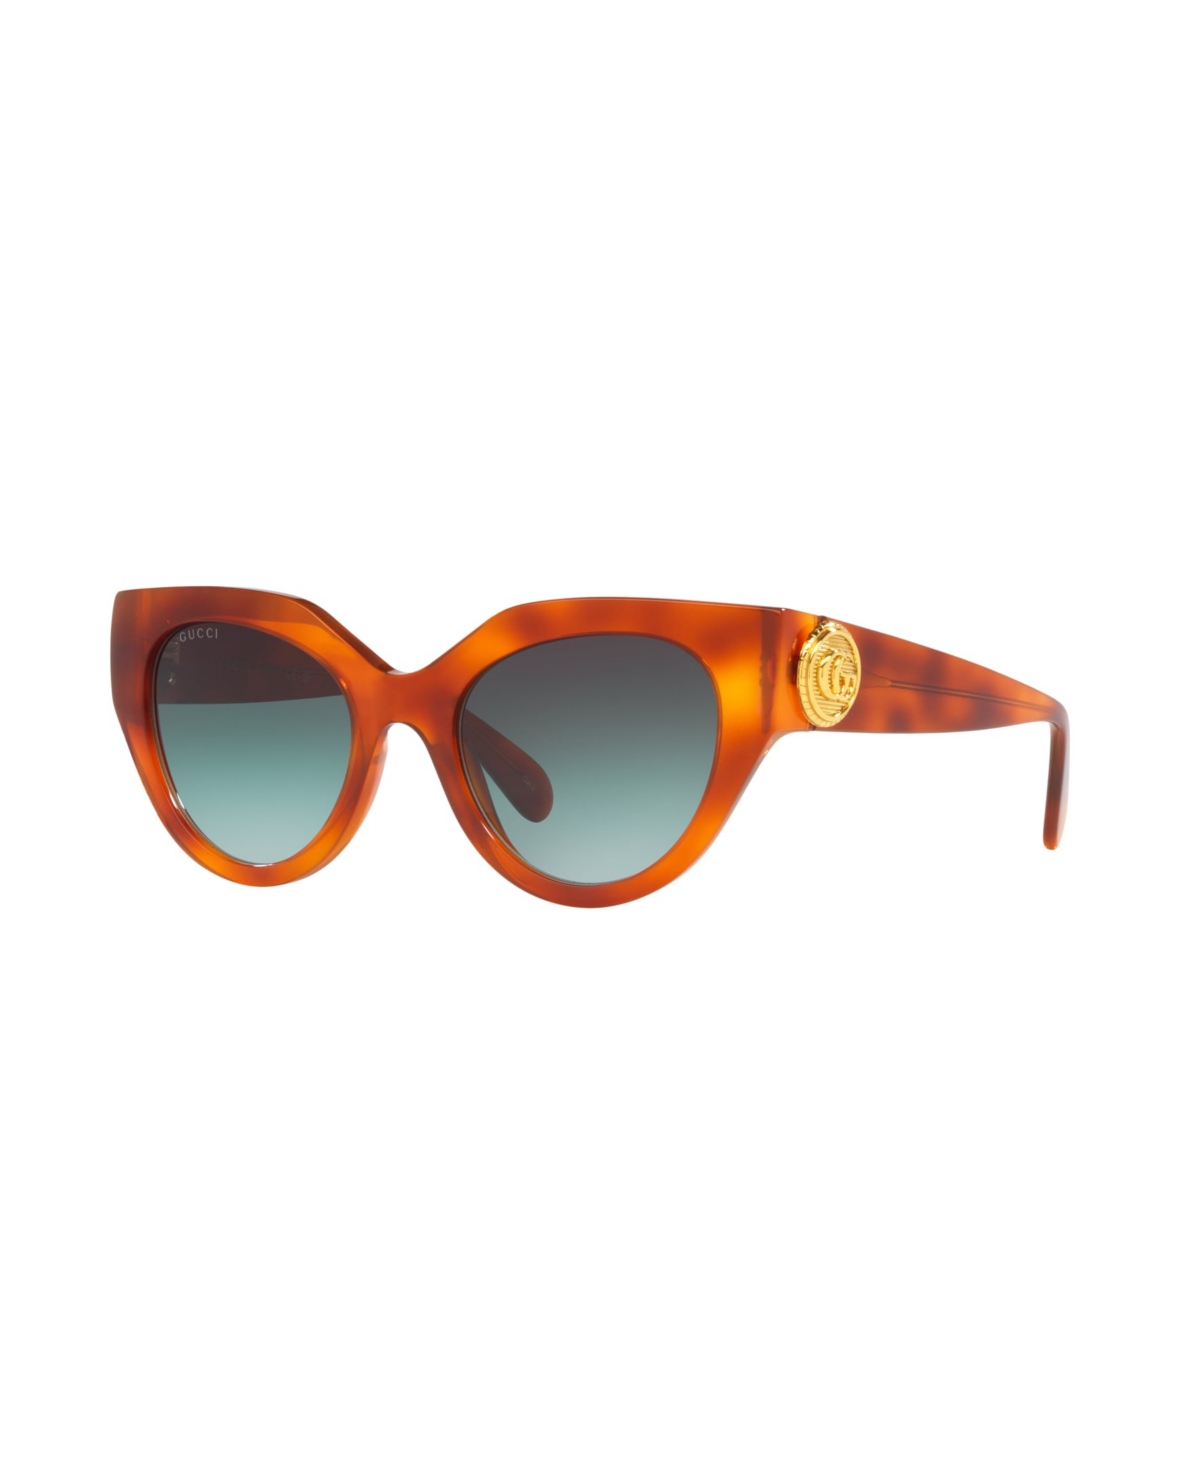 Women's Sunglasses, Gg1408S Gc002117 - Tortoise